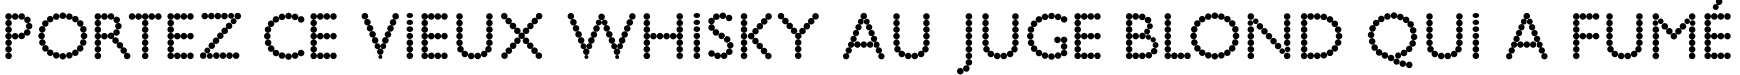 Пример написания шрифтом Bead Chain текста на французском